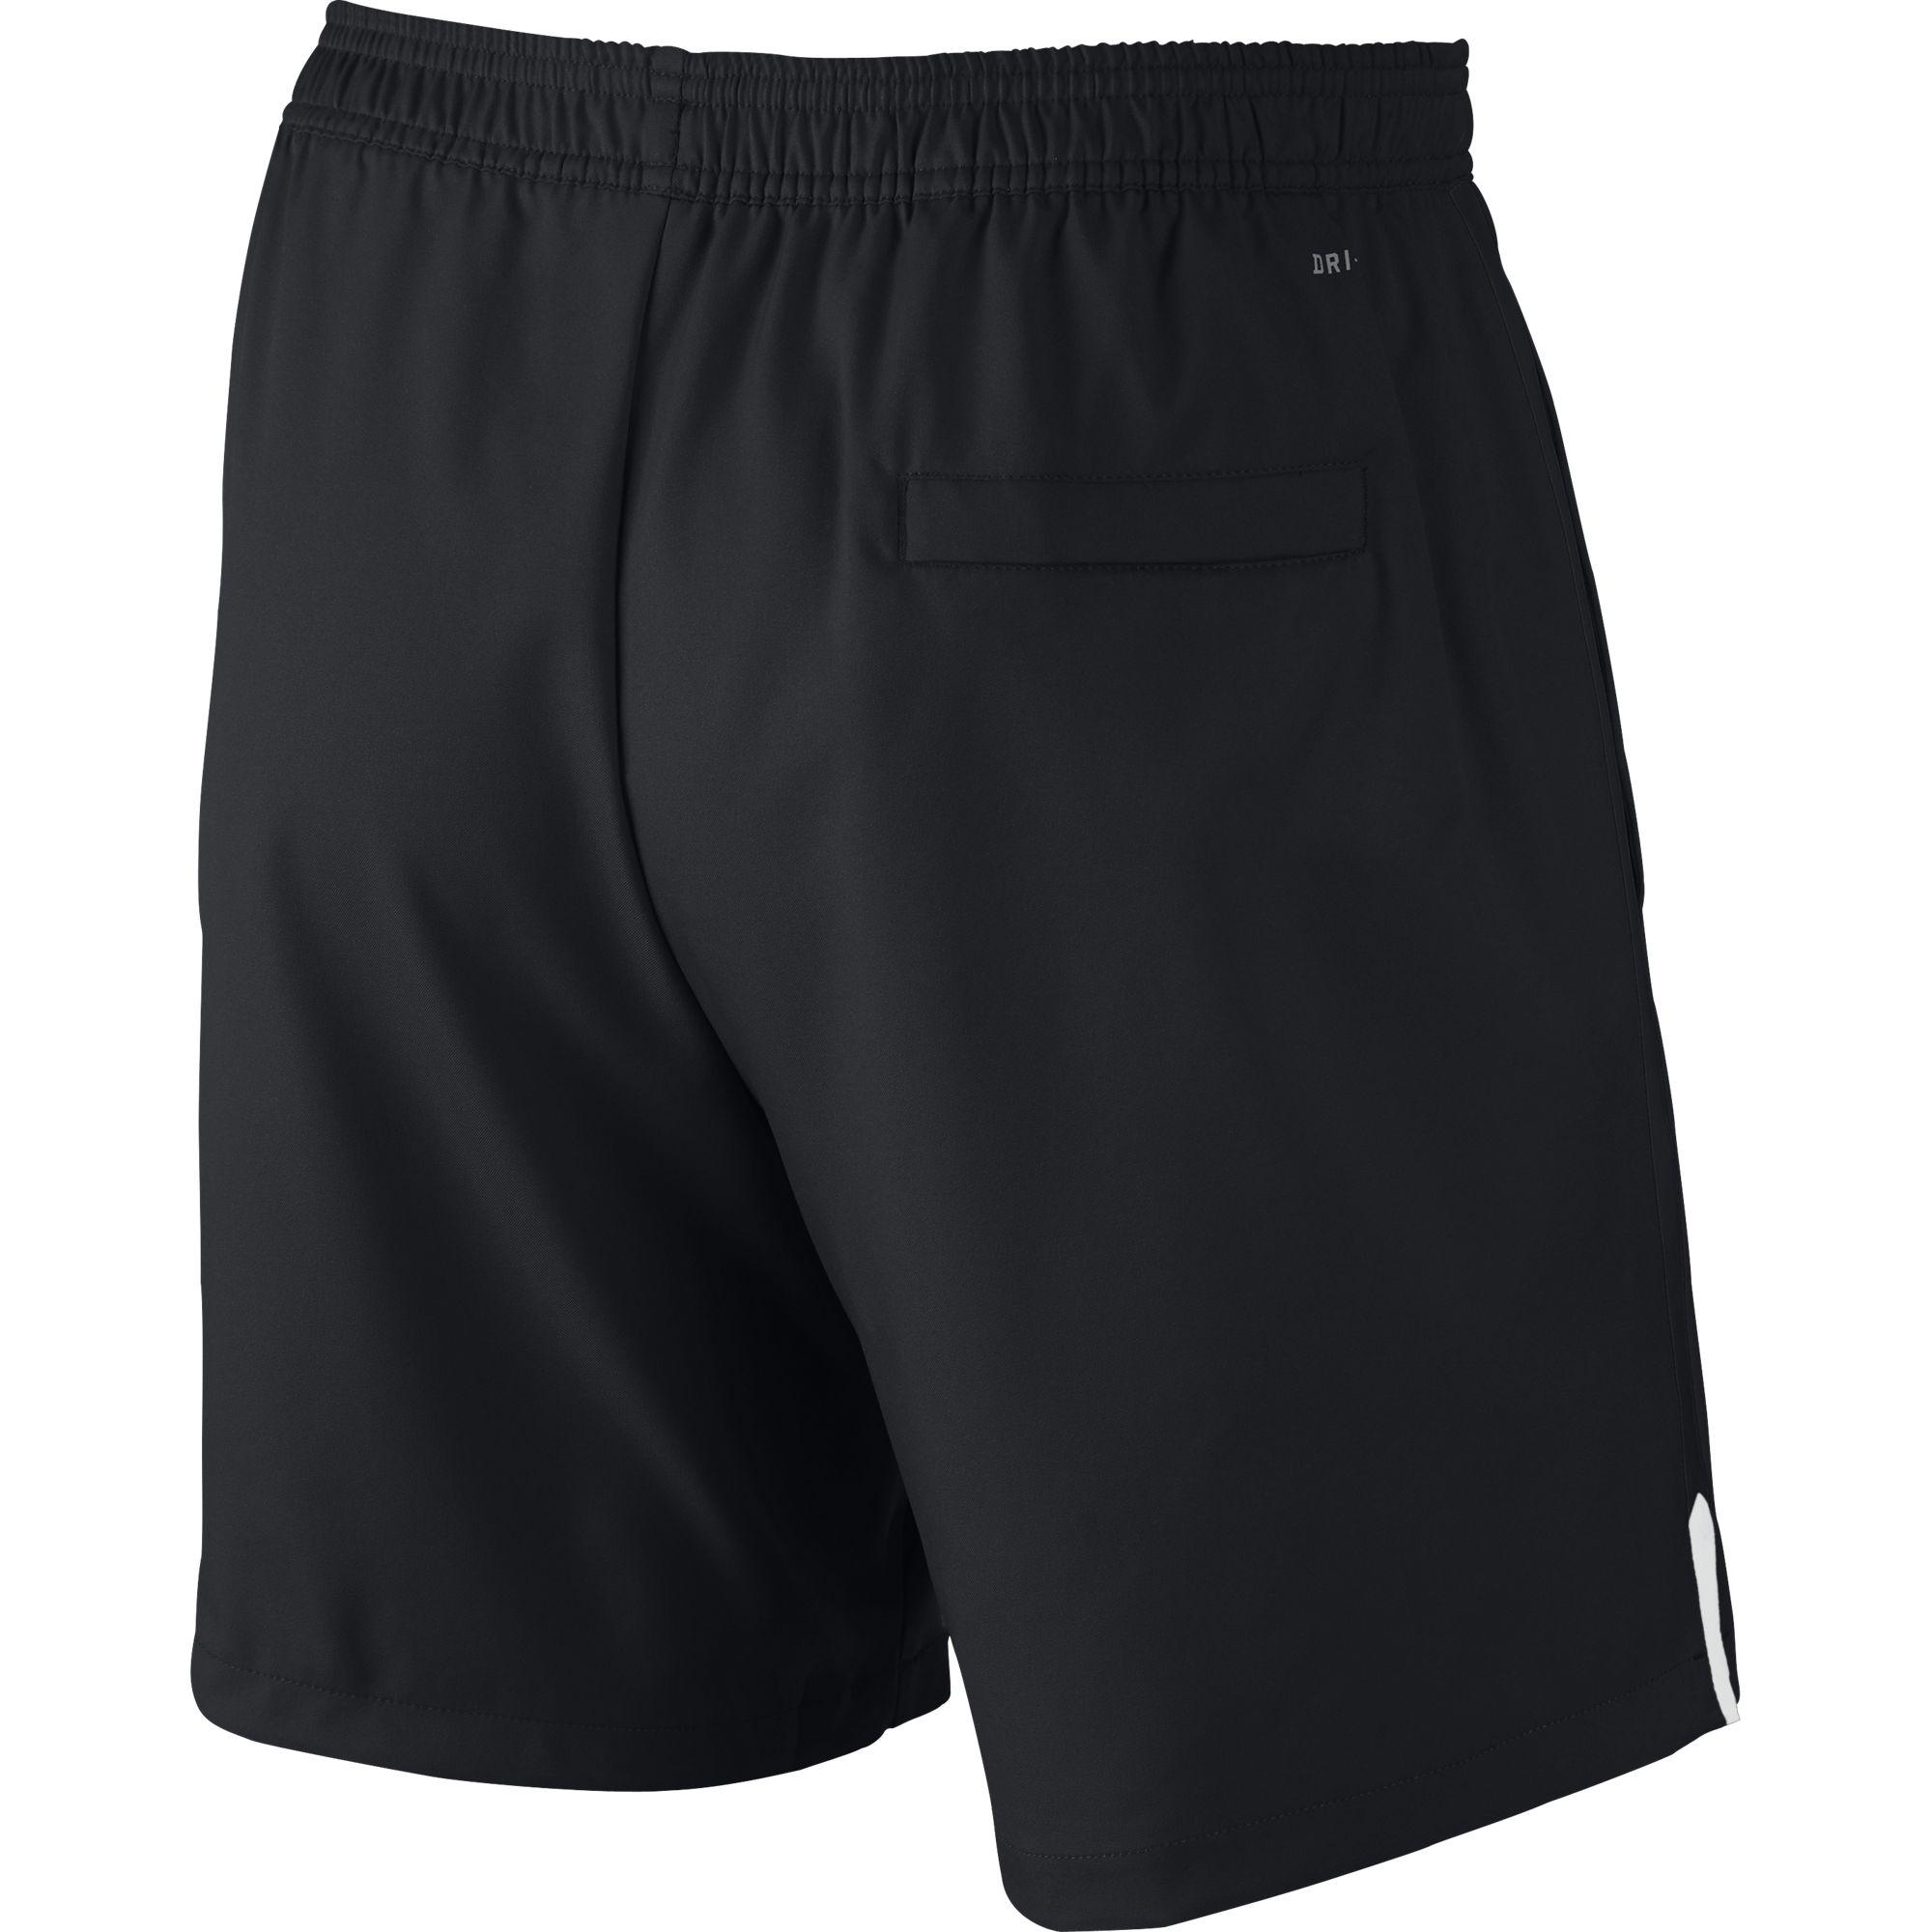 Nike Mens Court 7 Inch Tennis Shorts - Black - Tennisnuts.com